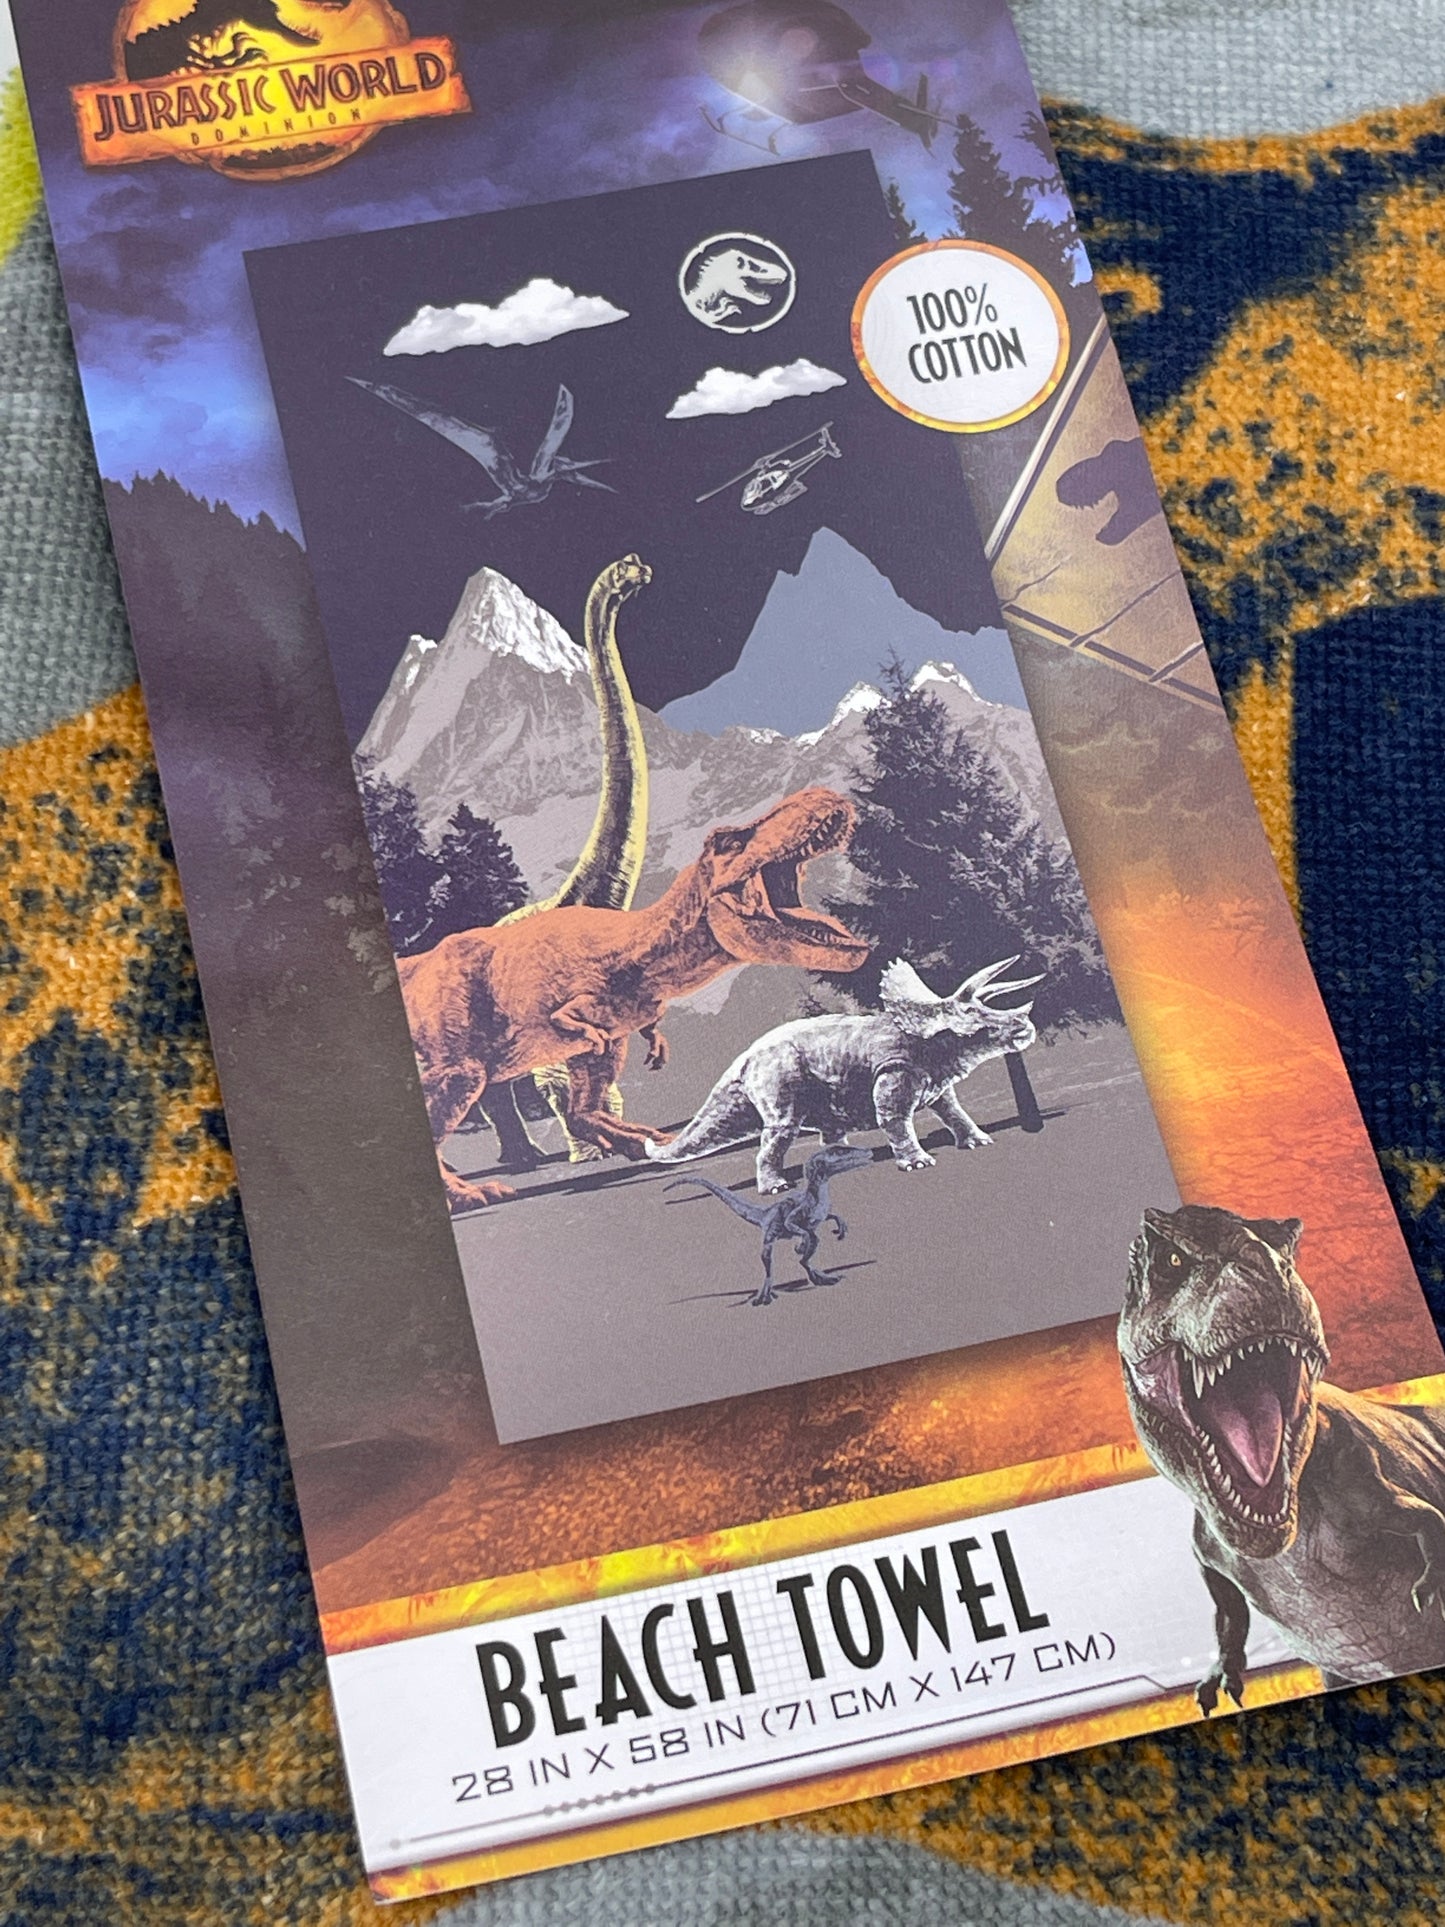 Jurassic World Dominion "Bath Towel Beach Towel Towel" T-Rex 71 x 147 cm